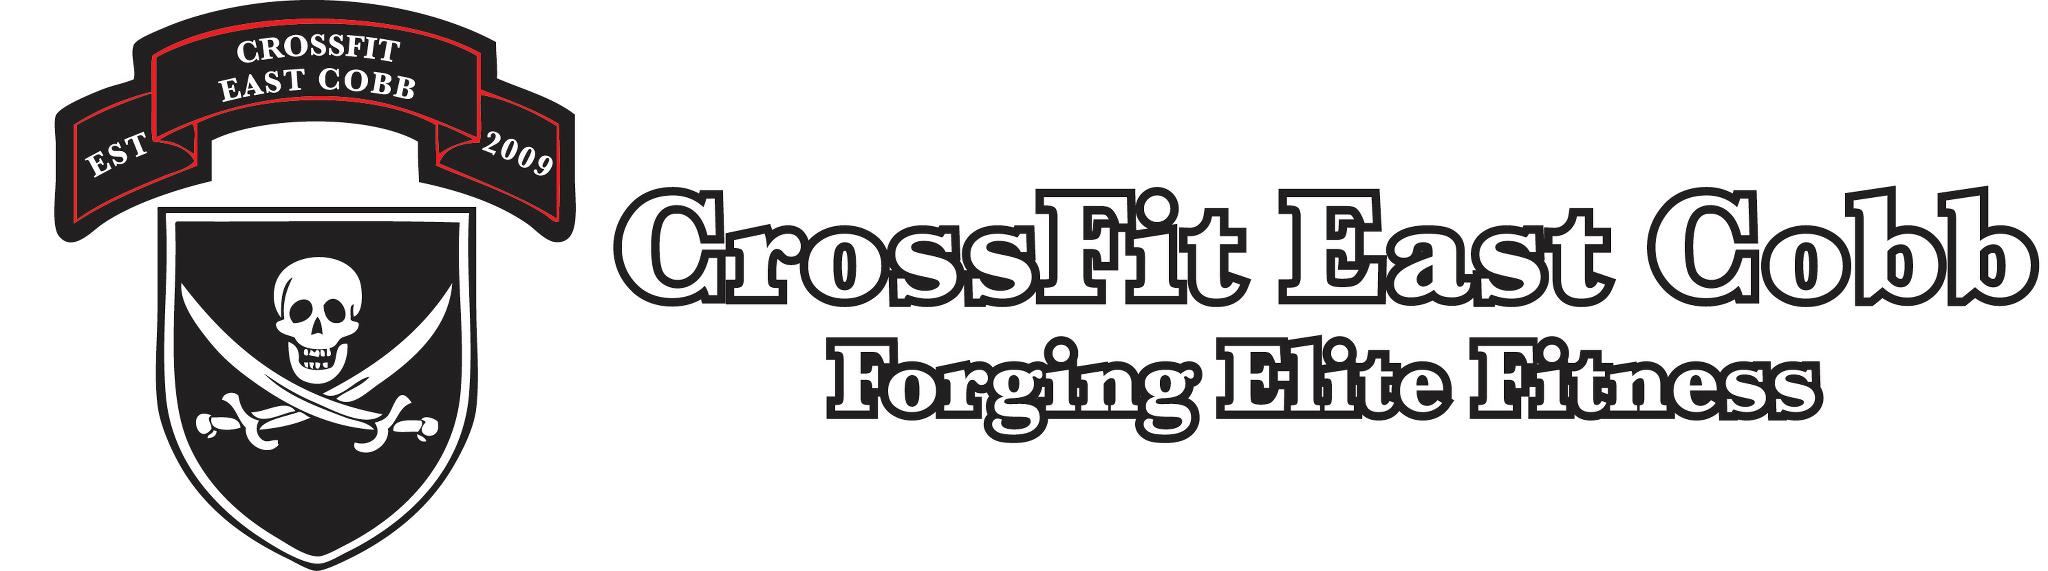 CrossFit East Cobb